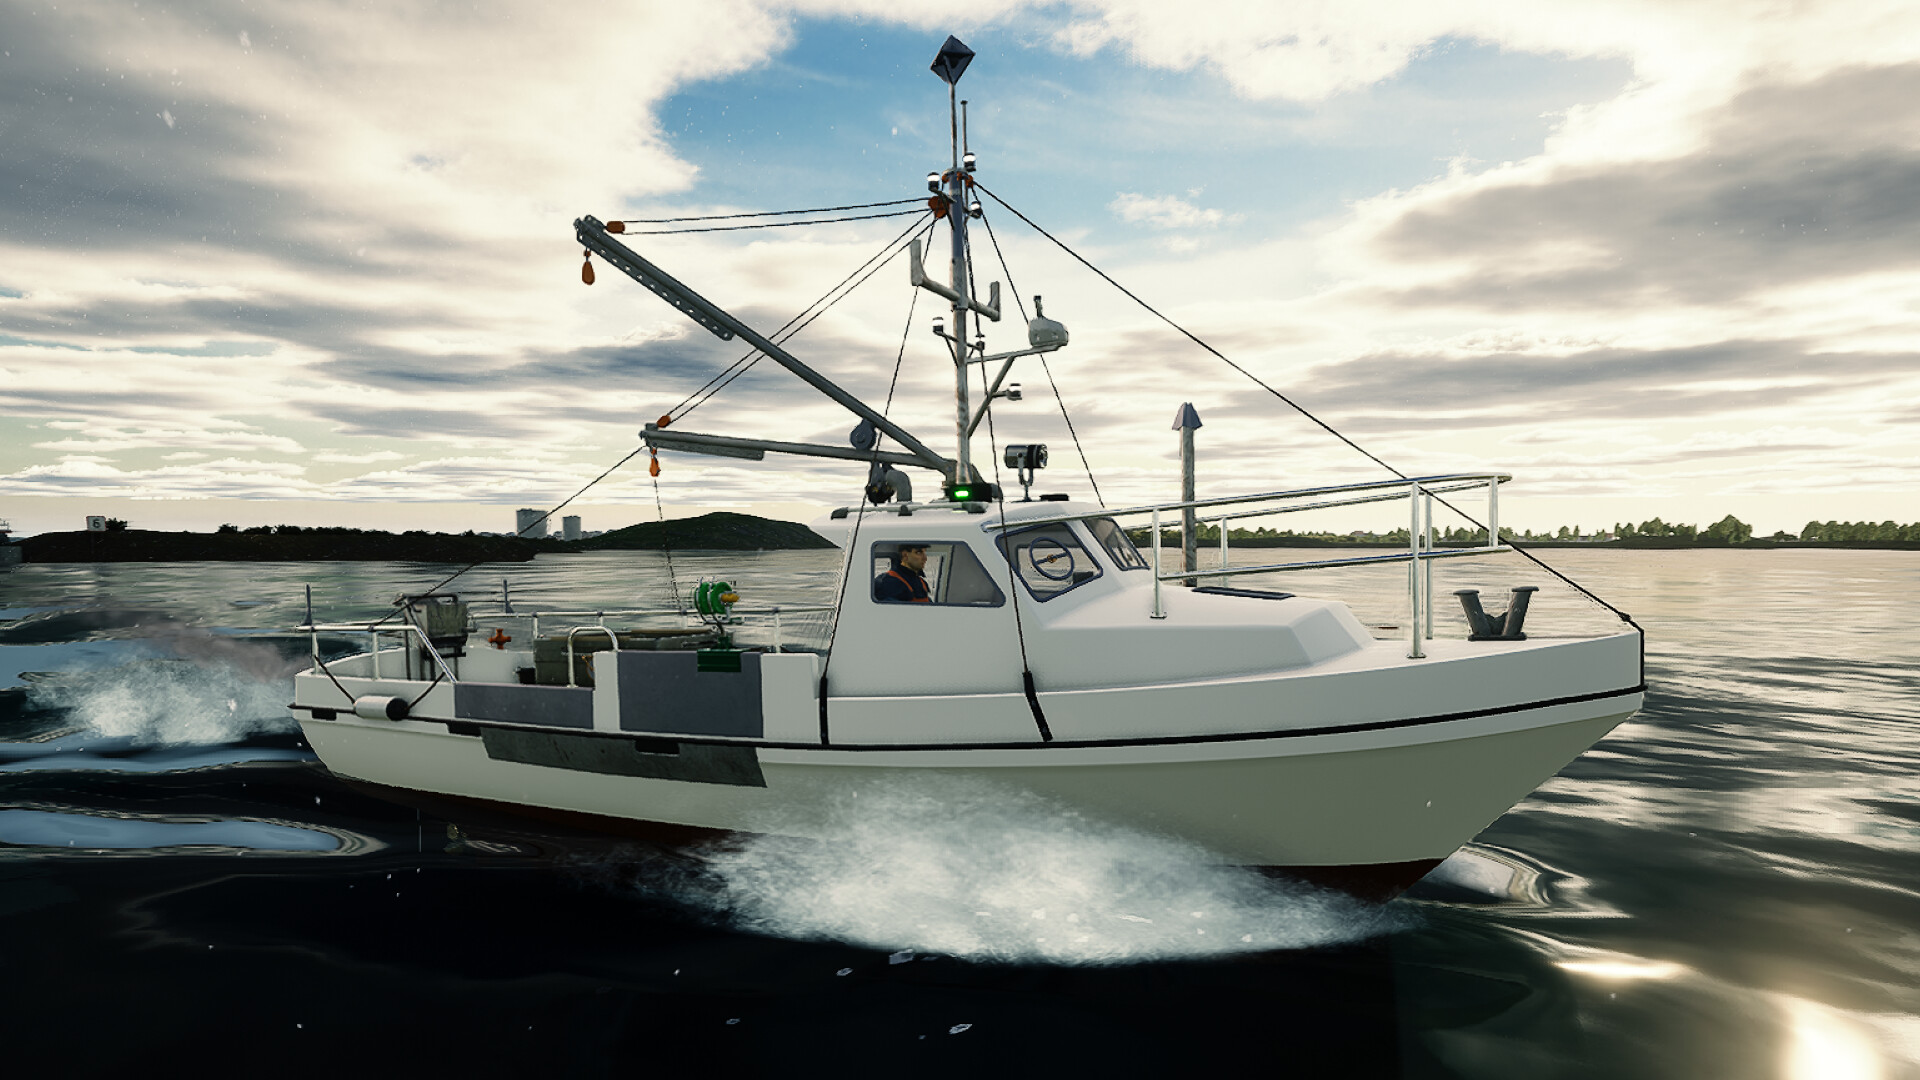 [$ 4.25] Fishing: North Atlantic - A.F. Theriault DLC Steam CD Key